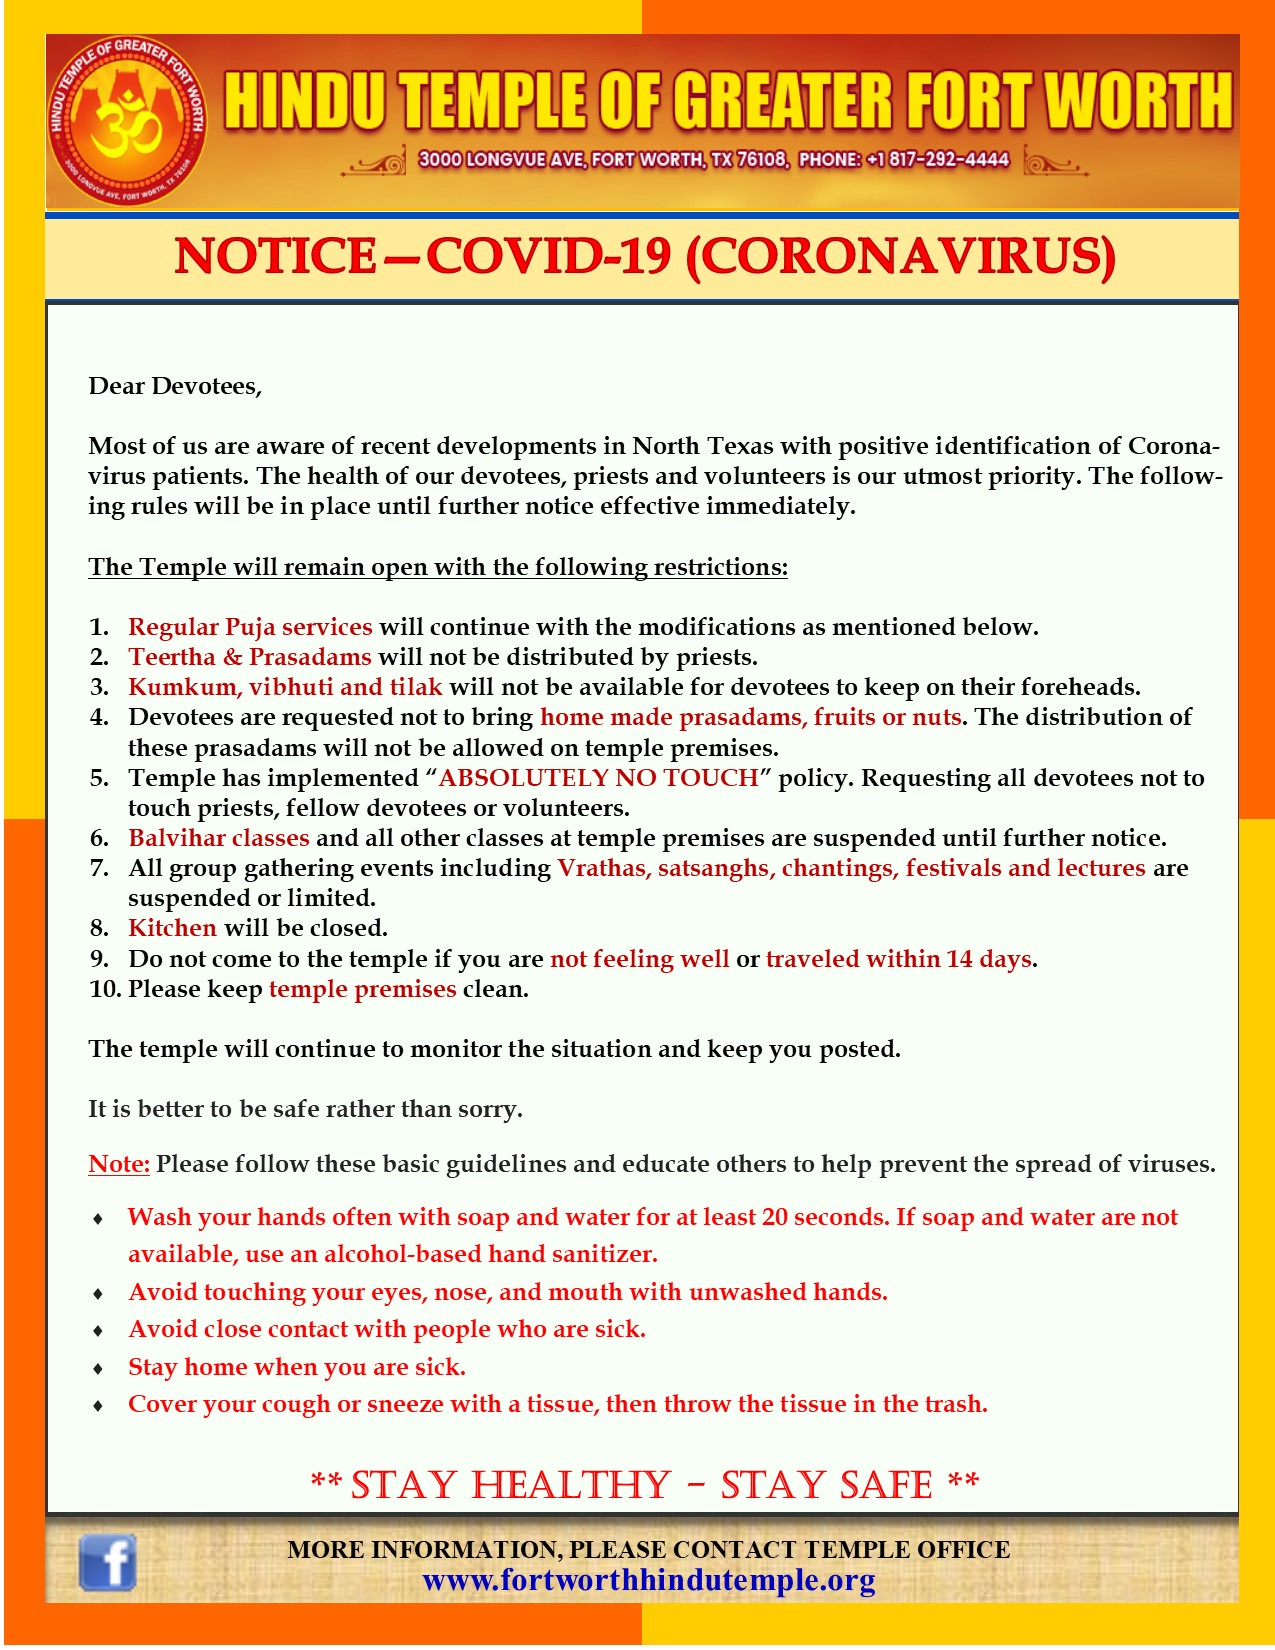 Notice Regarding Corona virus